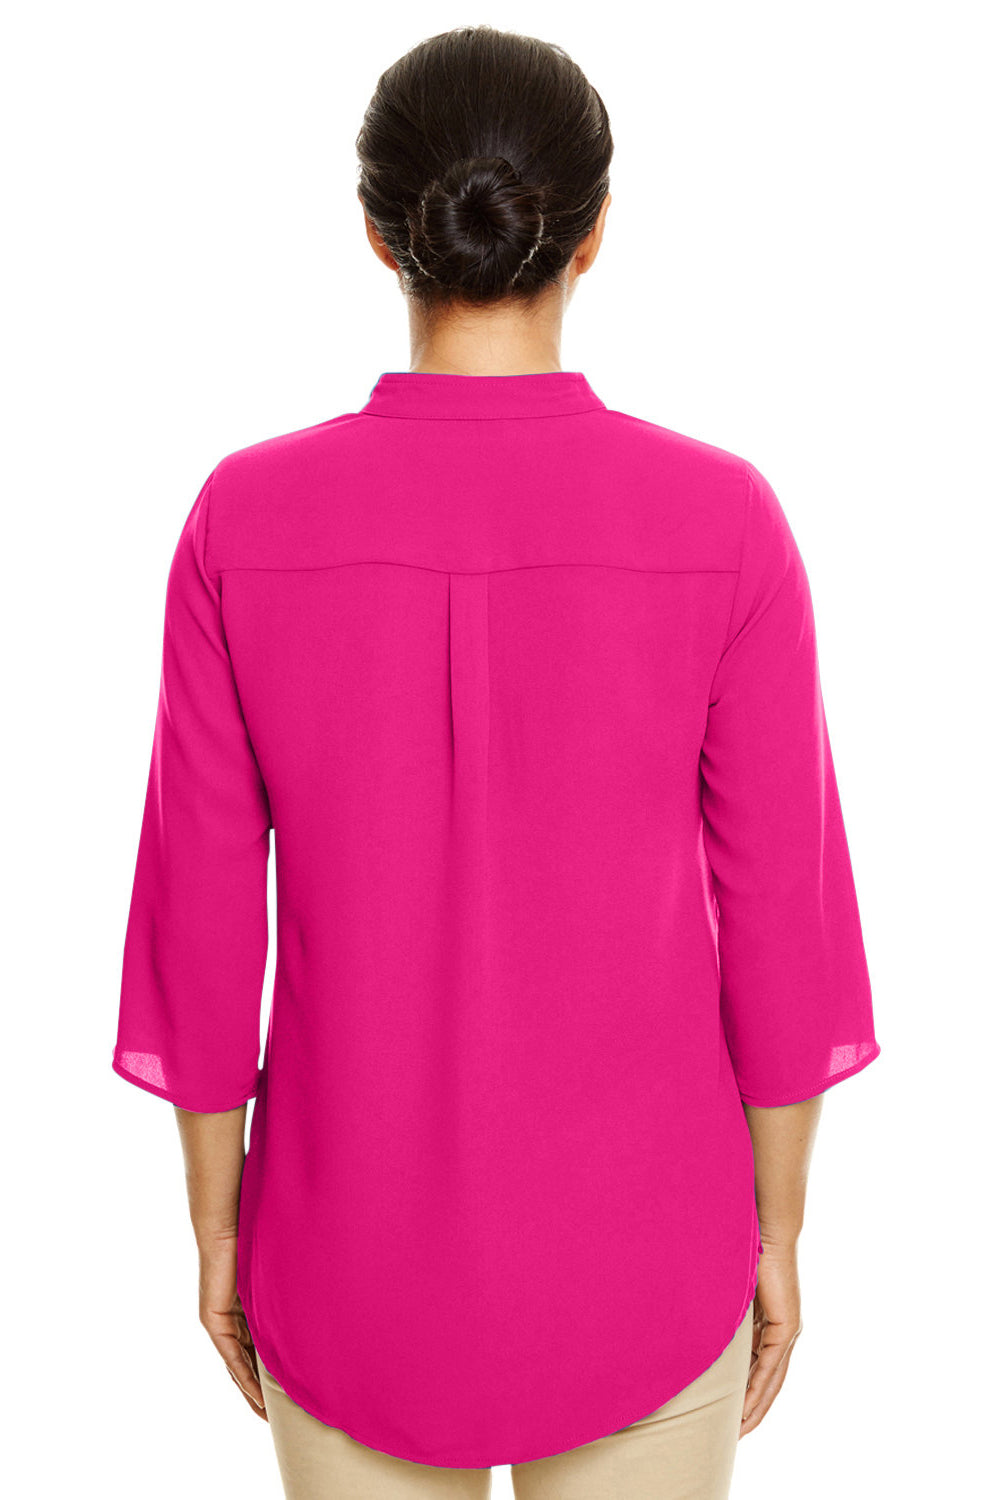 Devon & Jones DP611W Womens Perfect Fit Short Sleeve 1/4 Zip Crepe Tunic Crown Raspberry Pink Back